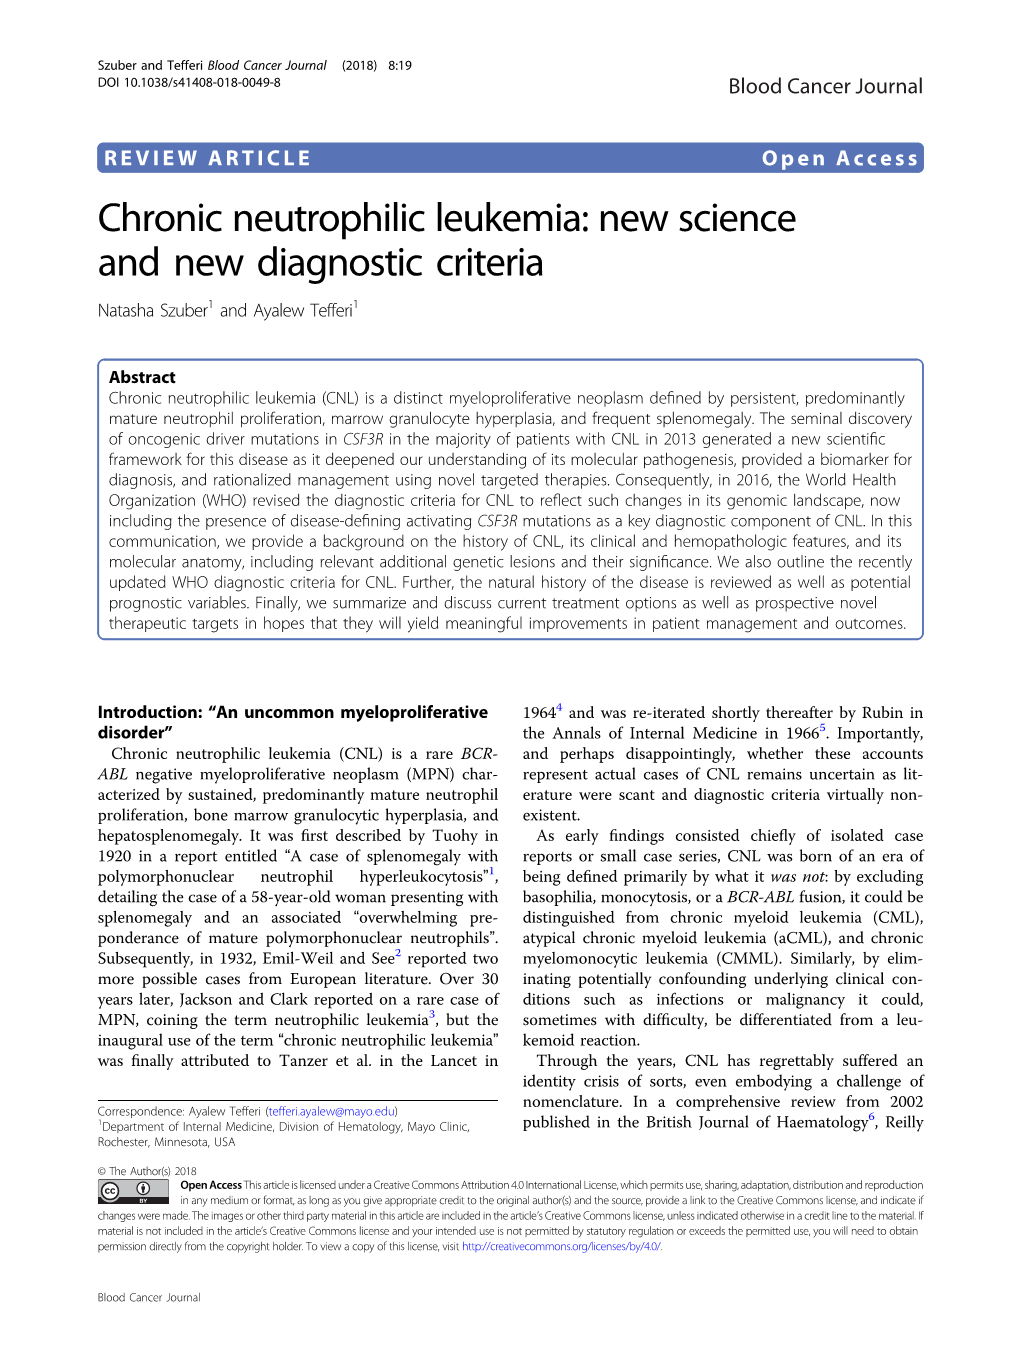 Chronic Neutrophilic Leukemia: New Science and New Diagnostic Criteria Natasha Szuber1 and Ayalew Tefferi1